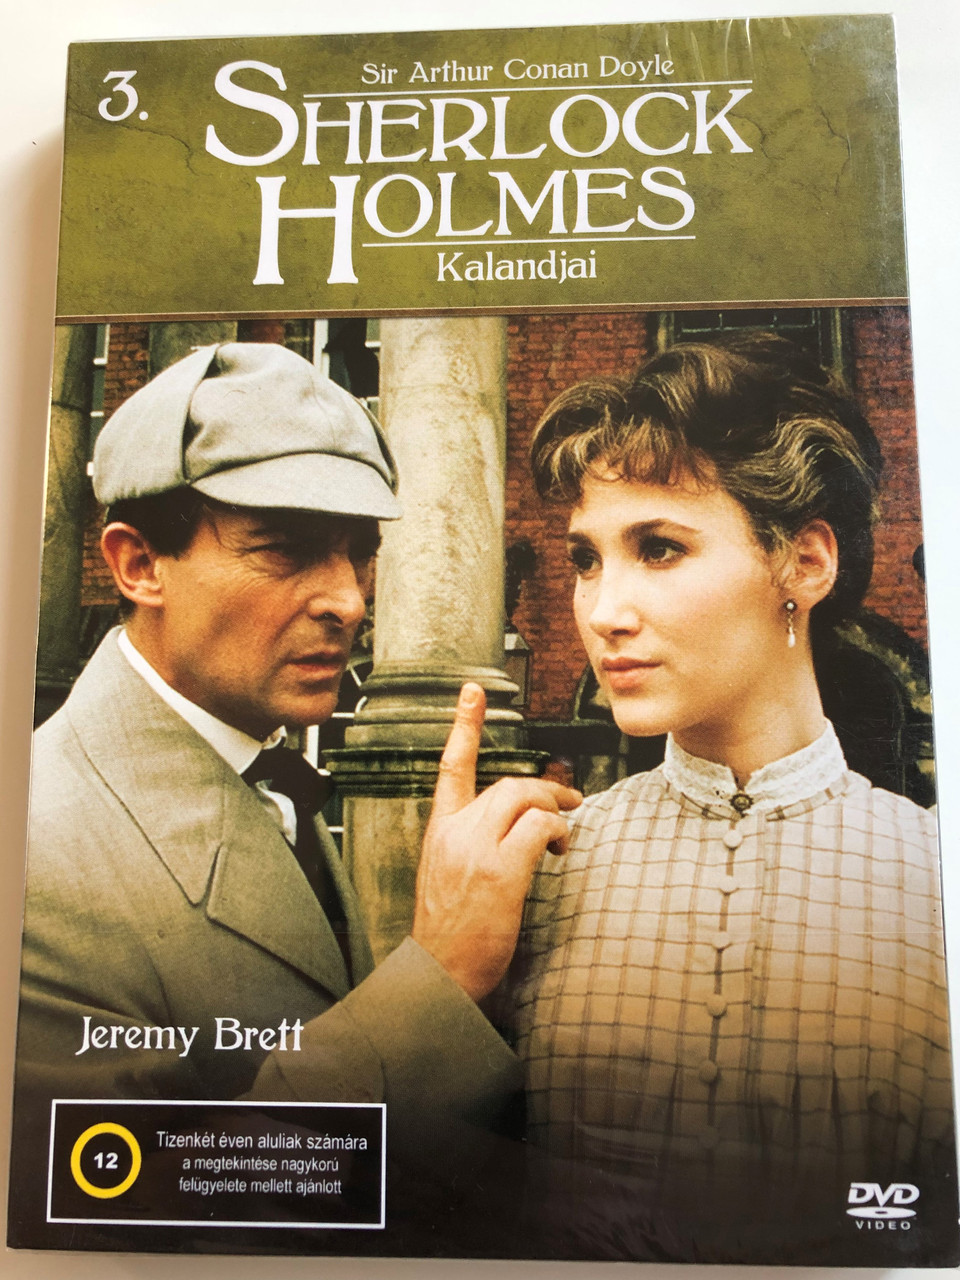 The Adventures of Sherlock Holmes 3 DVD Sherlock Holmes Kalandjai / Written  by Sir Arthur Conan Doyle /